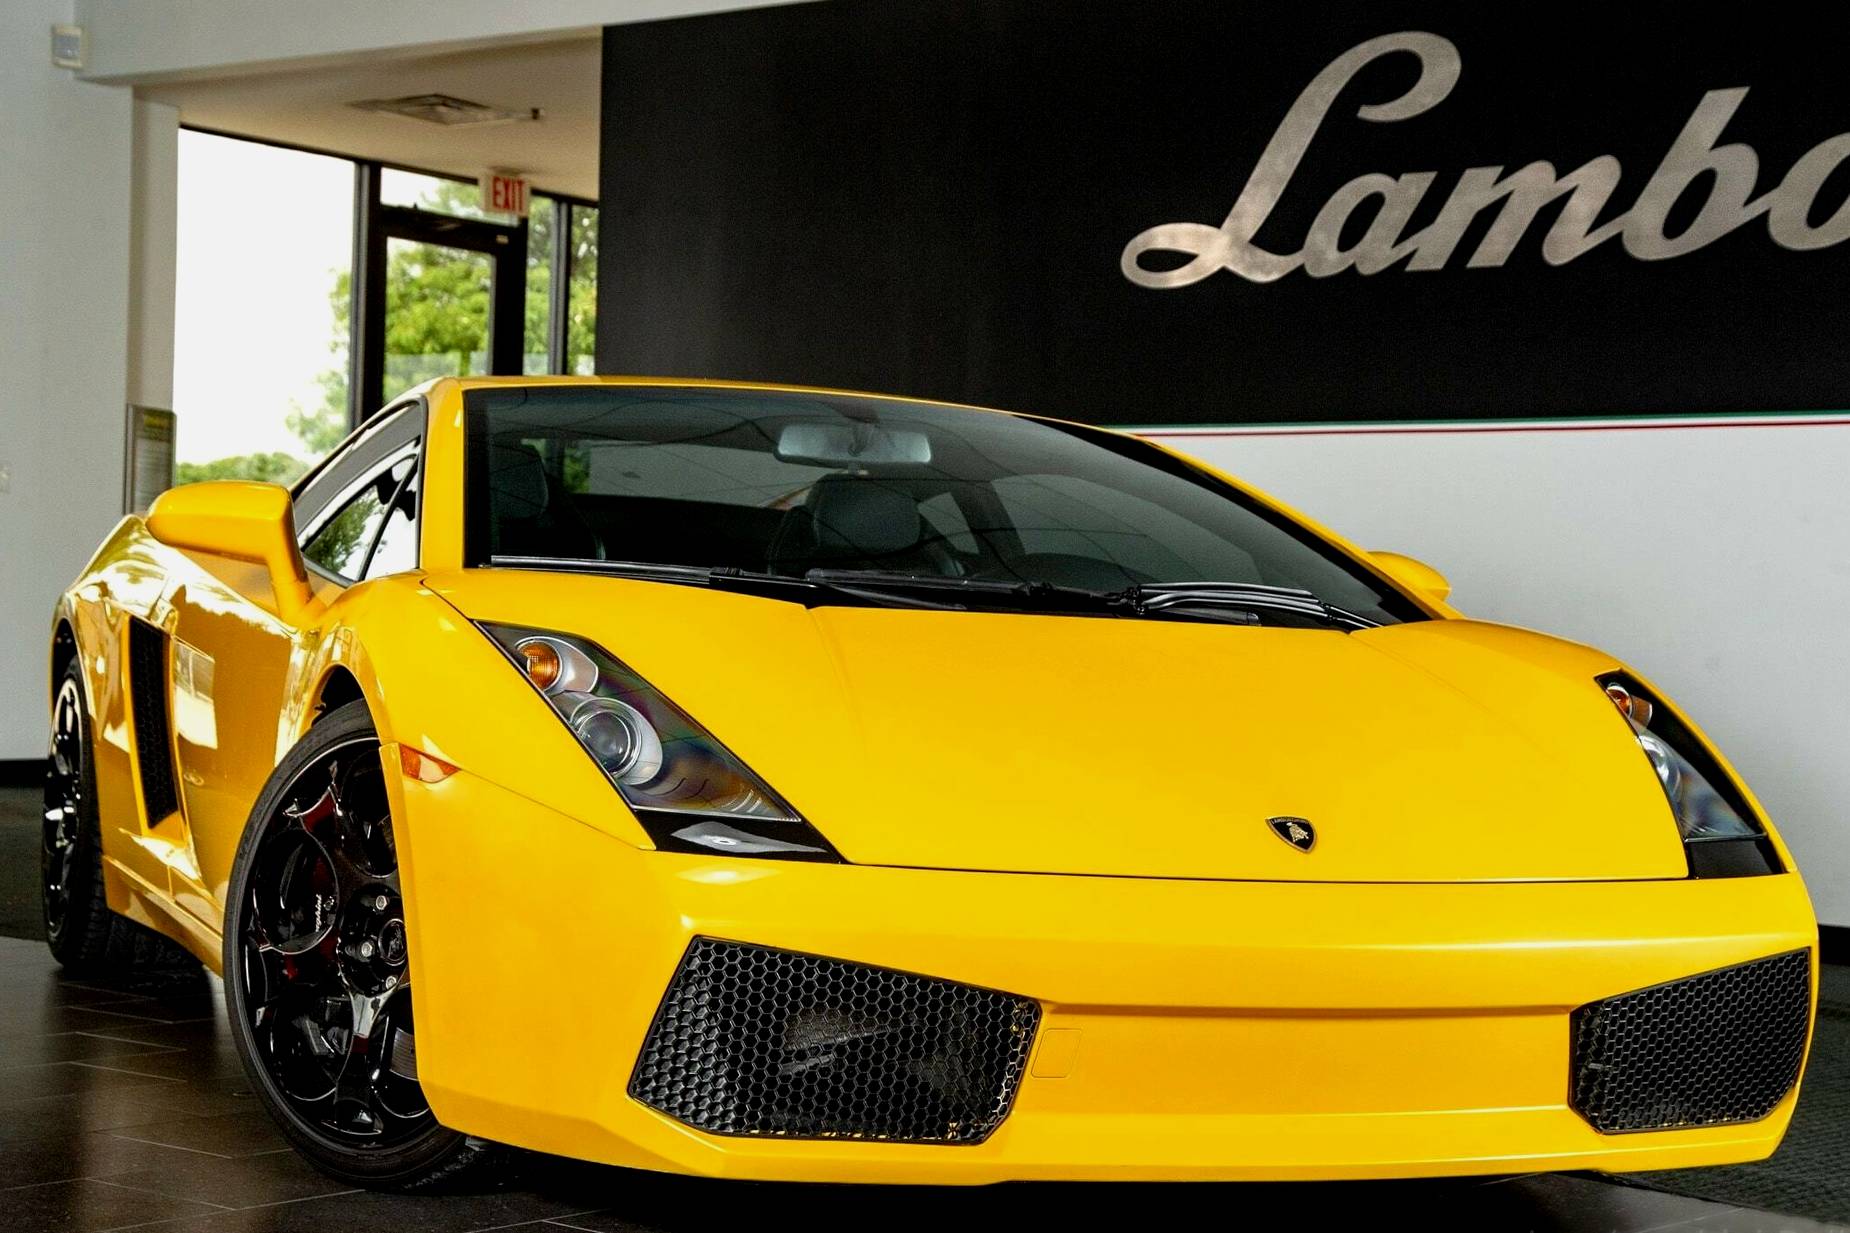 Best exotic cars under 100,000 and under 50,000:2004 Lamborghini Gallardo, Richardson, TX, USA, $79,999.